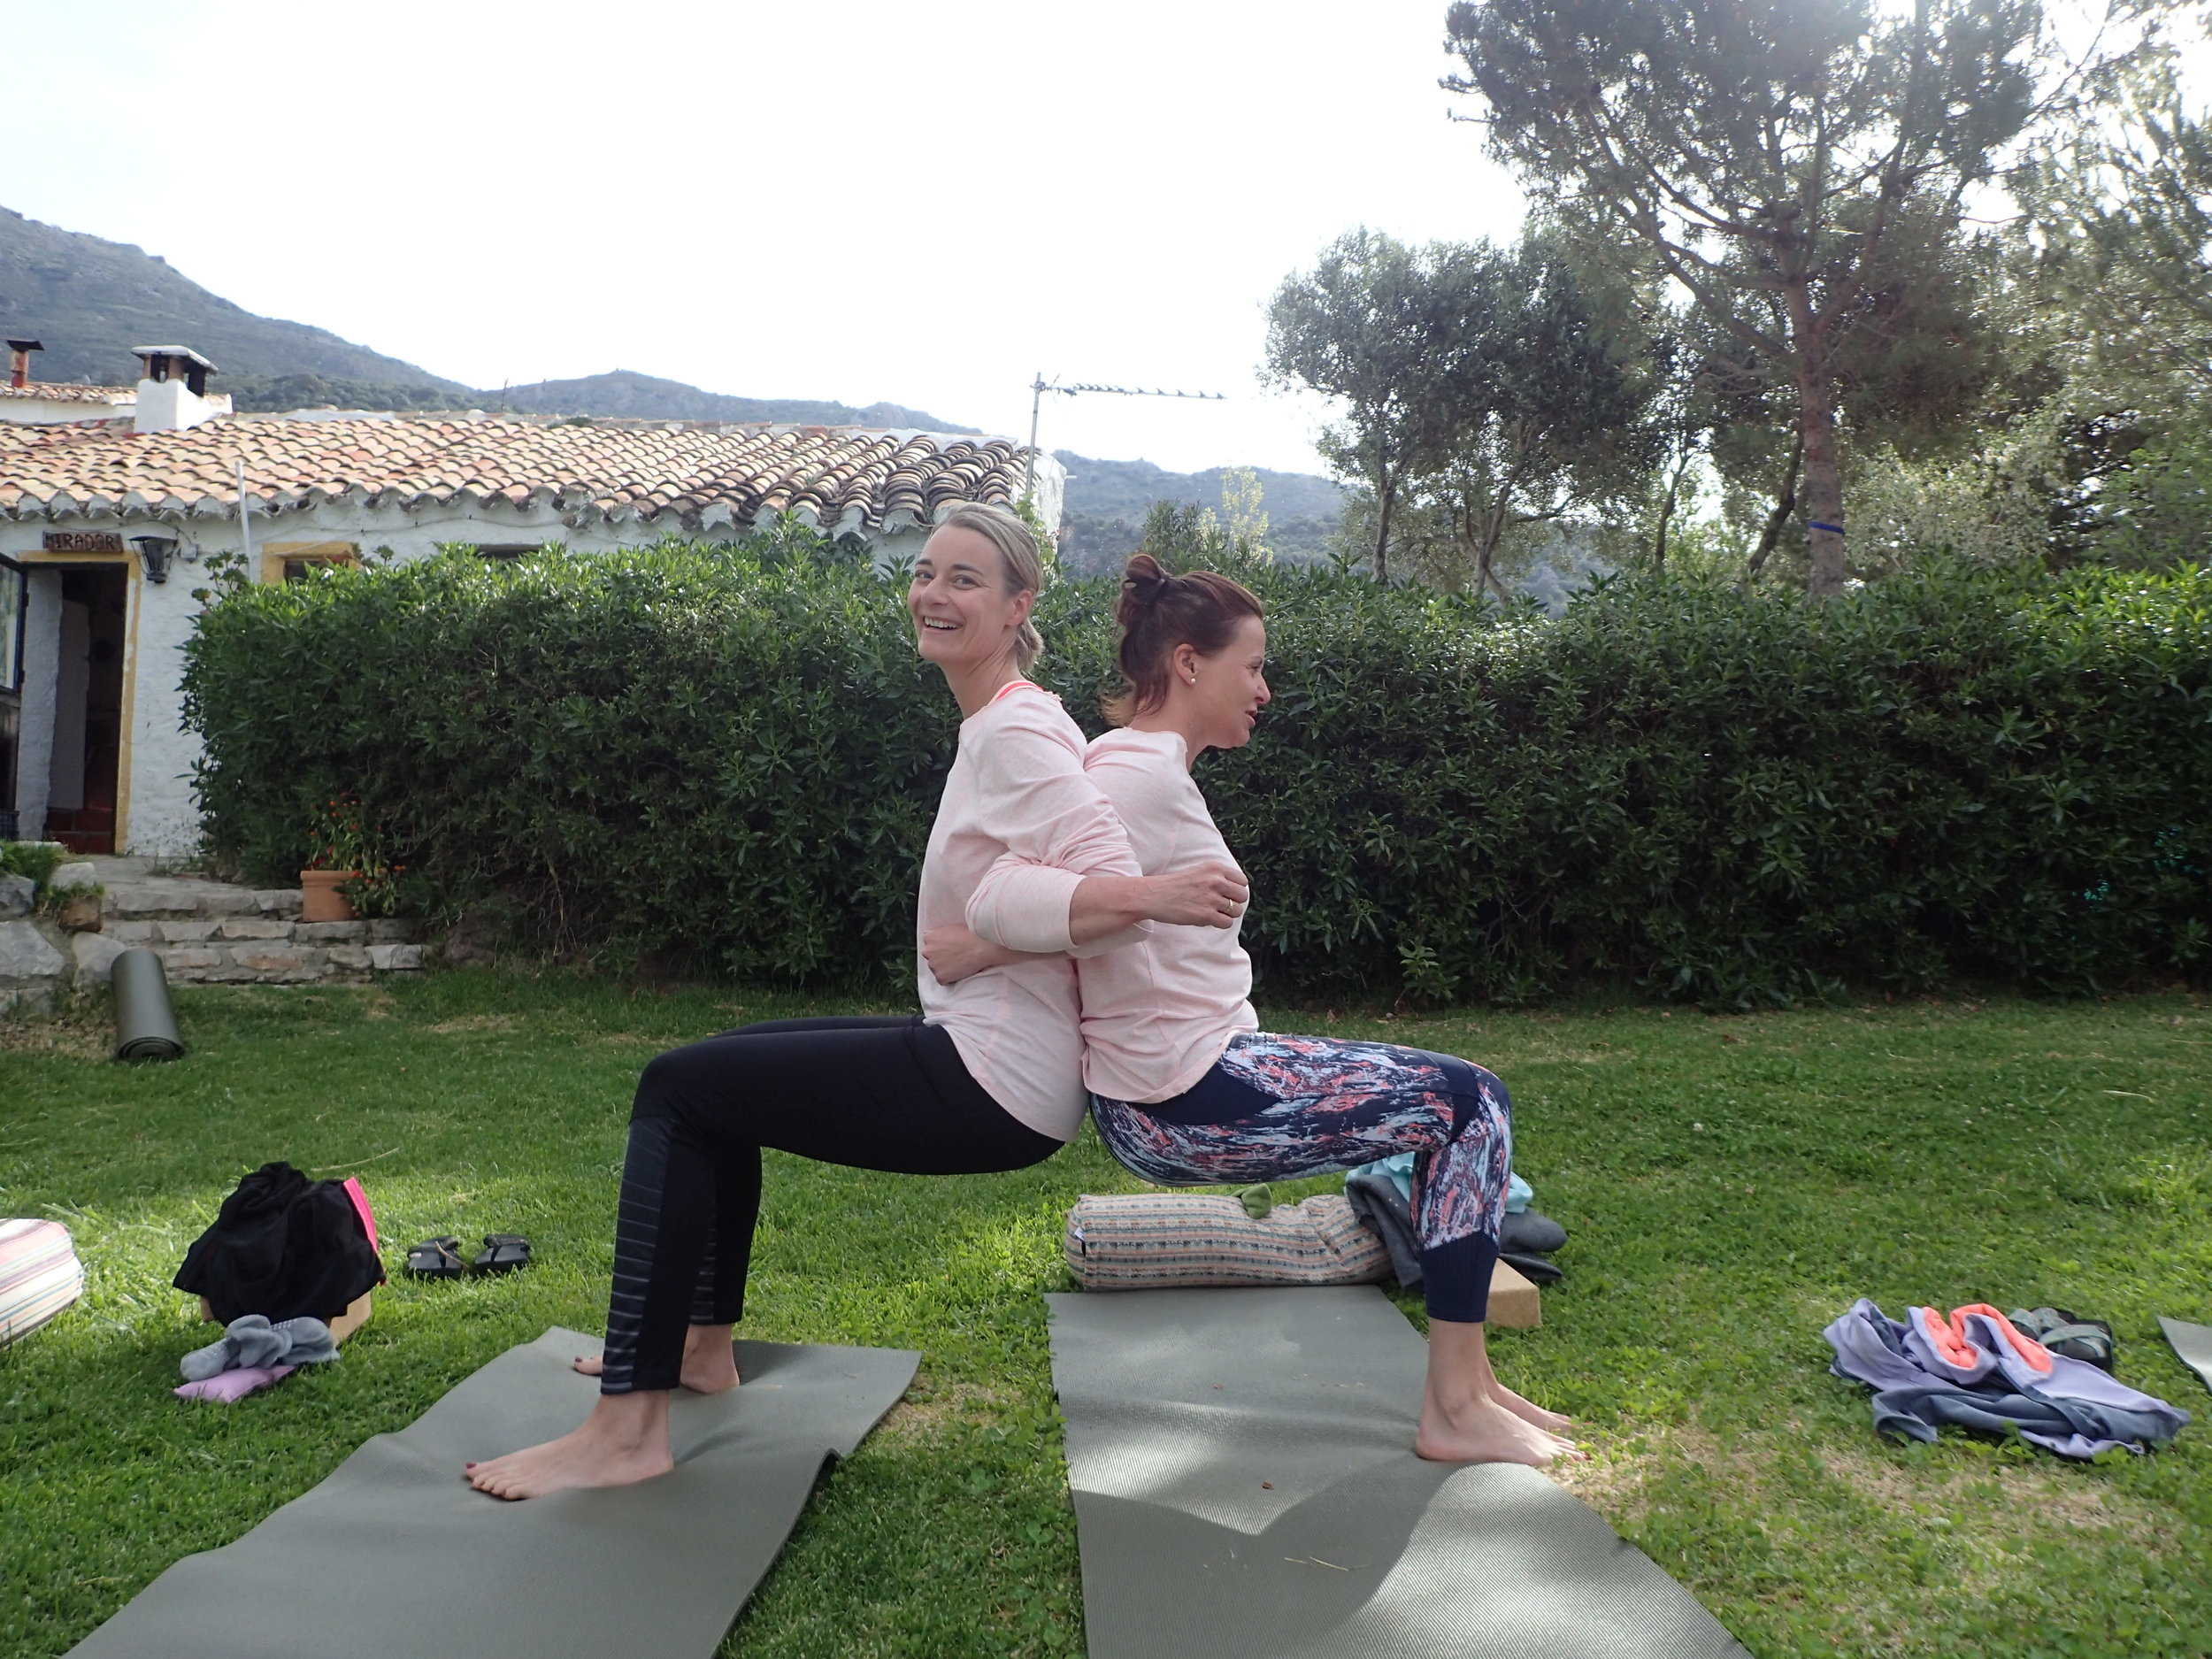 Partner yoga in garden at Yin Yang Yoga retreat in the Malaga mountains in Spain with Jane Bakx Yoga